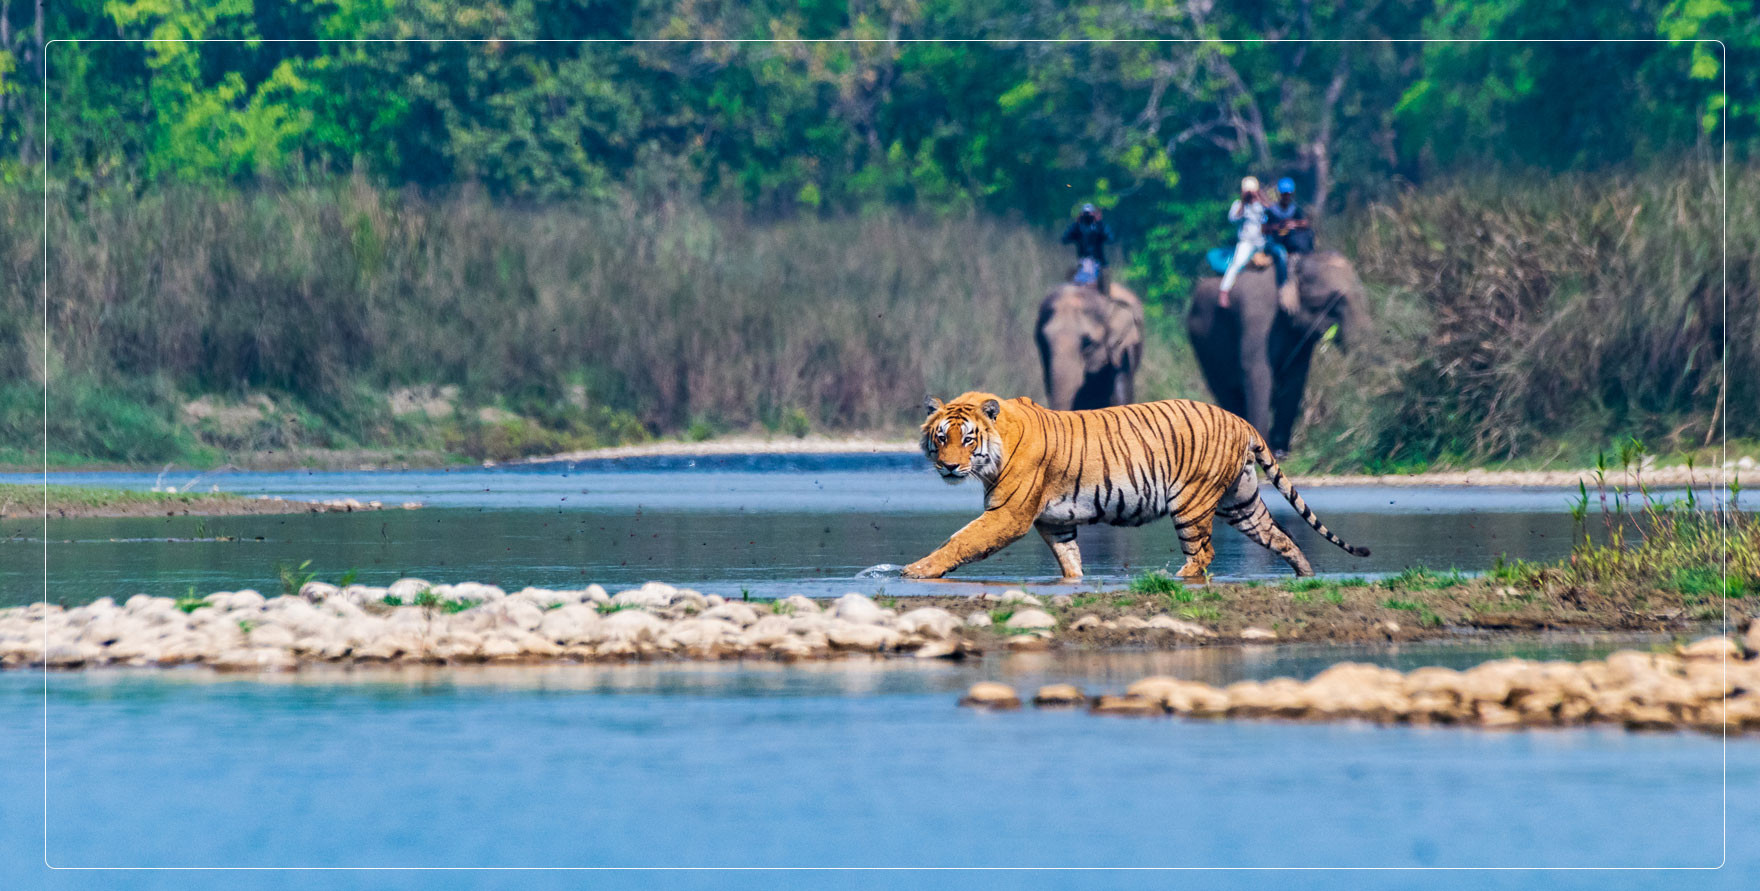 deepak rajbangshi-wildlife photographer-photo-tiger-bardiya 51706920366.jpg